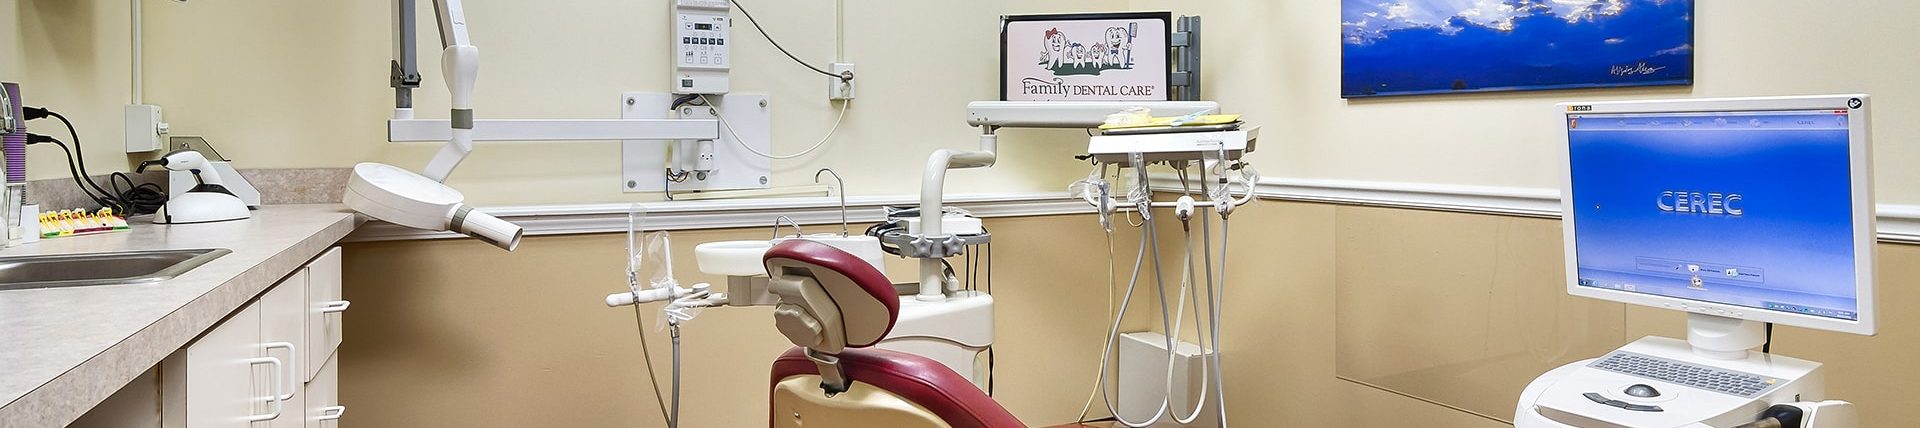 Evergreen Park Office Waiting Area - Family Dental Care